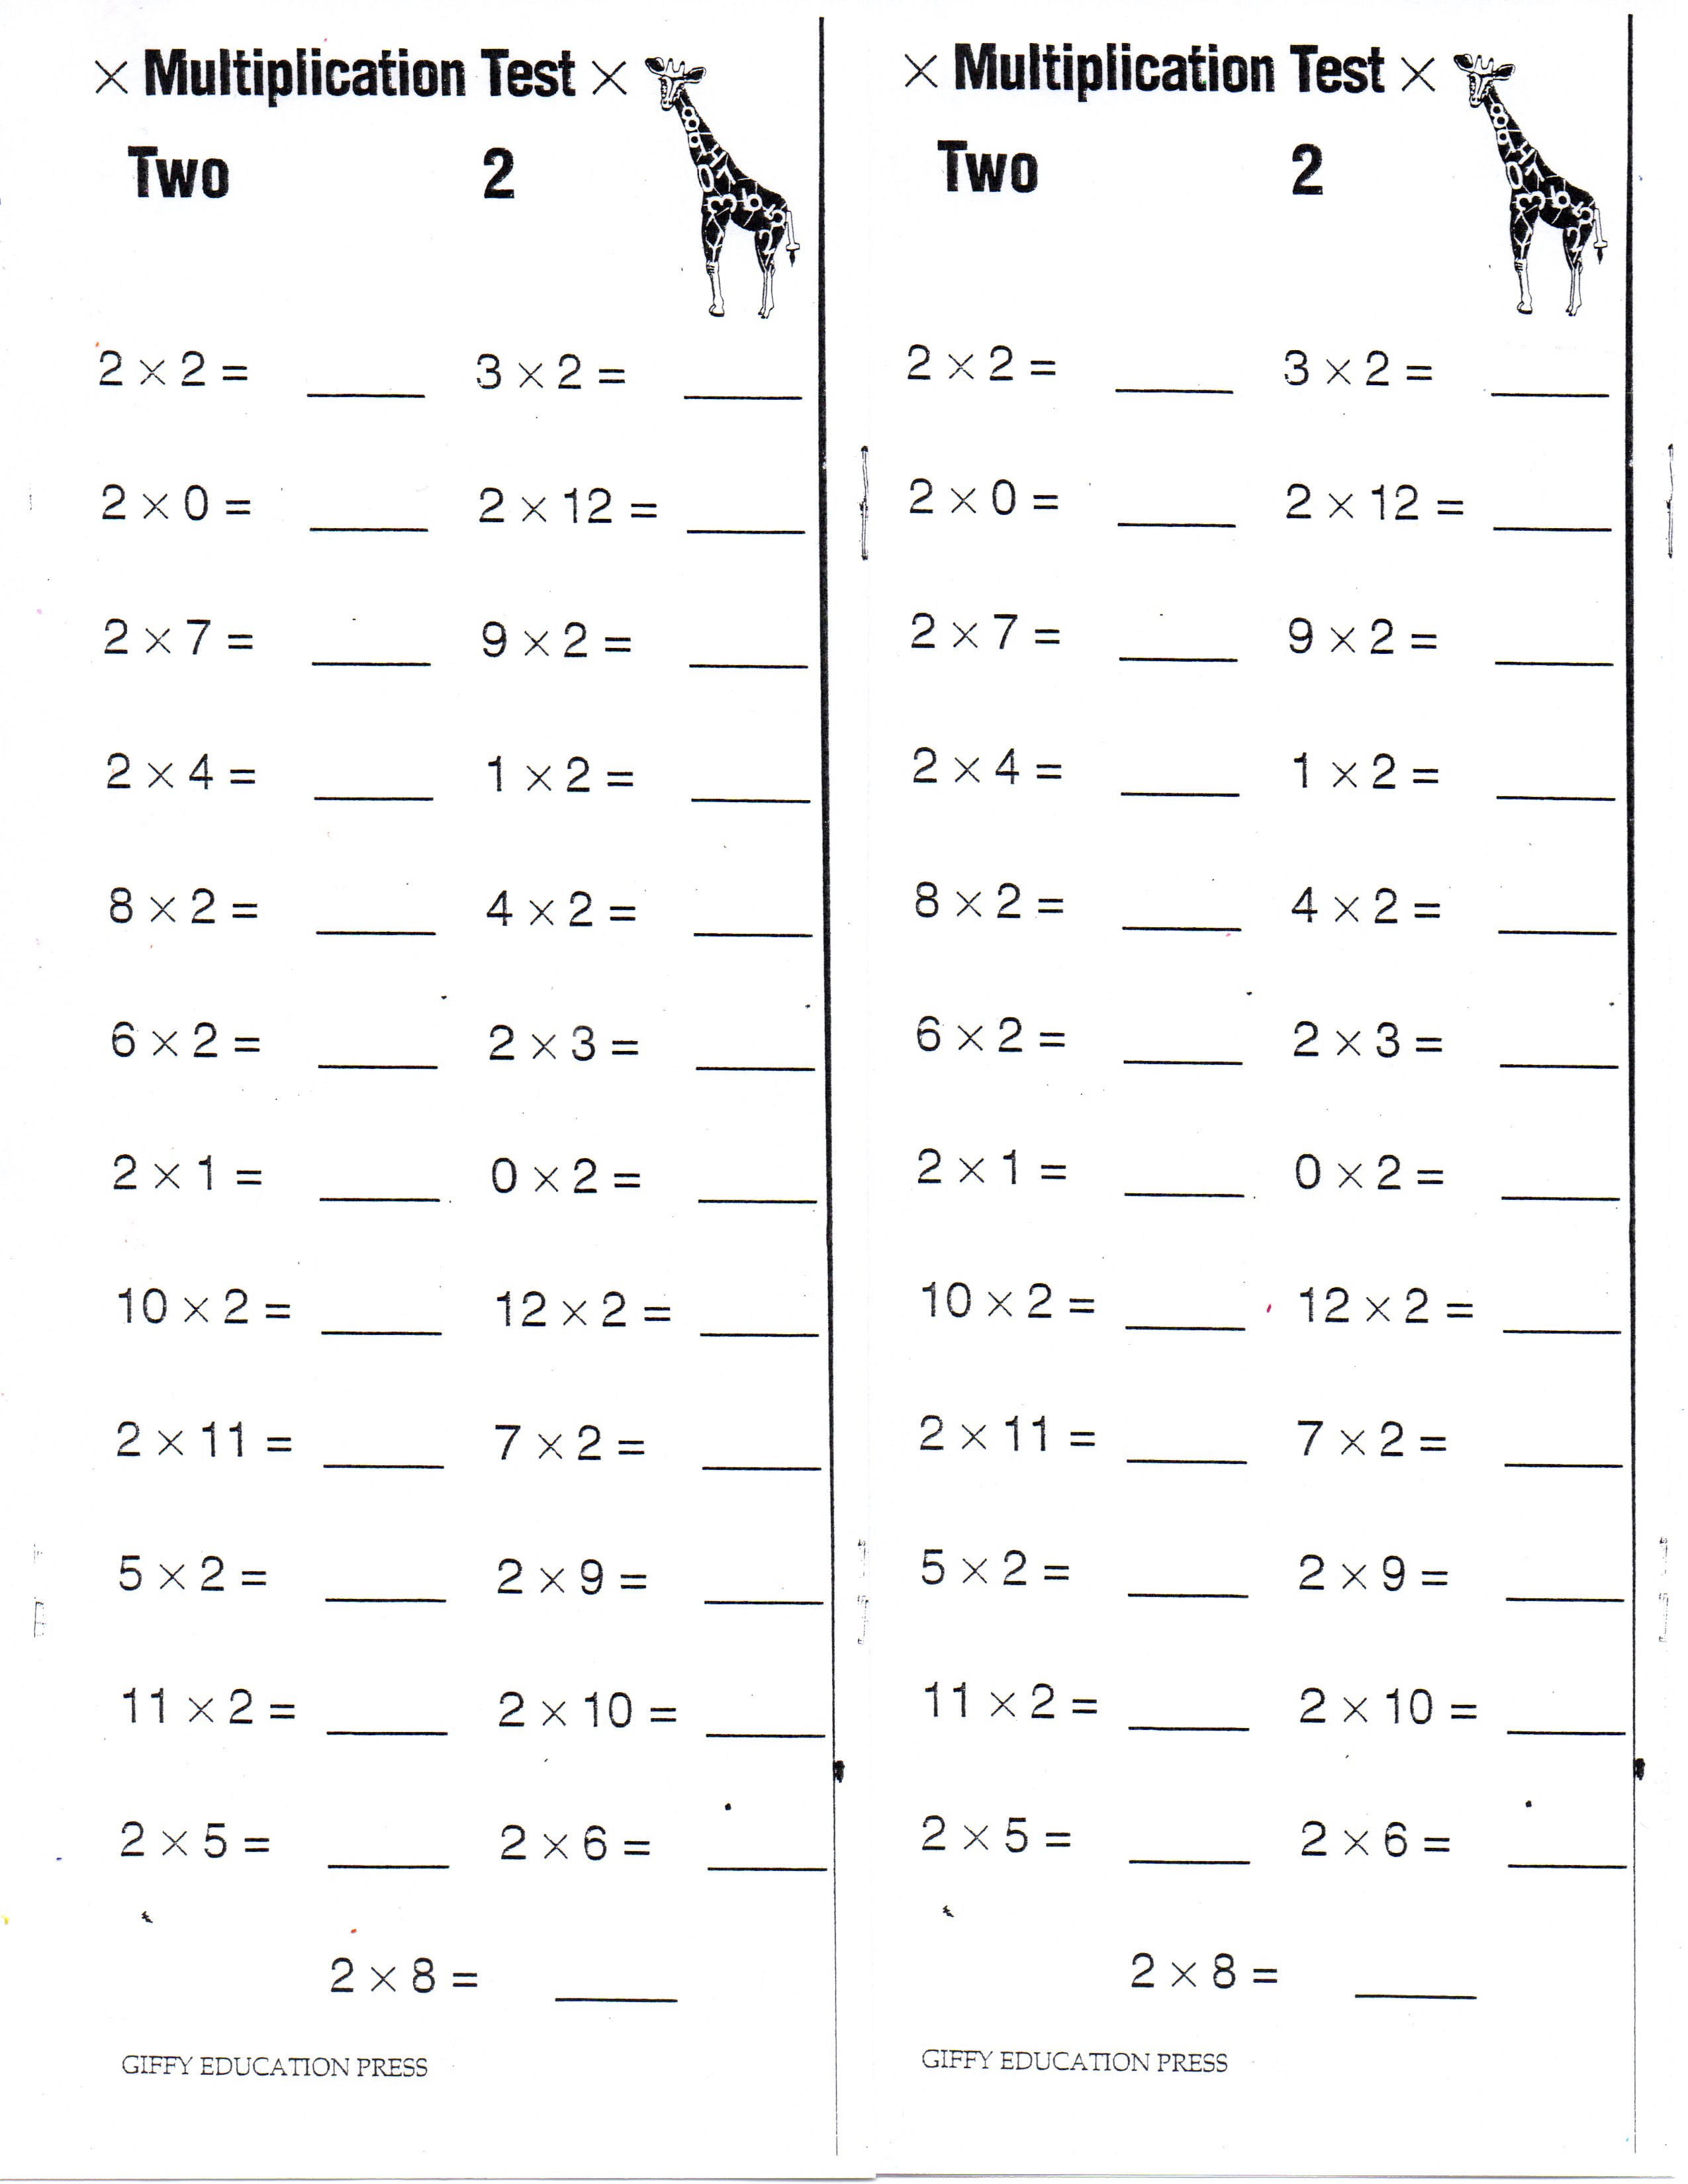 3 One Minute Multiplication Worksheets